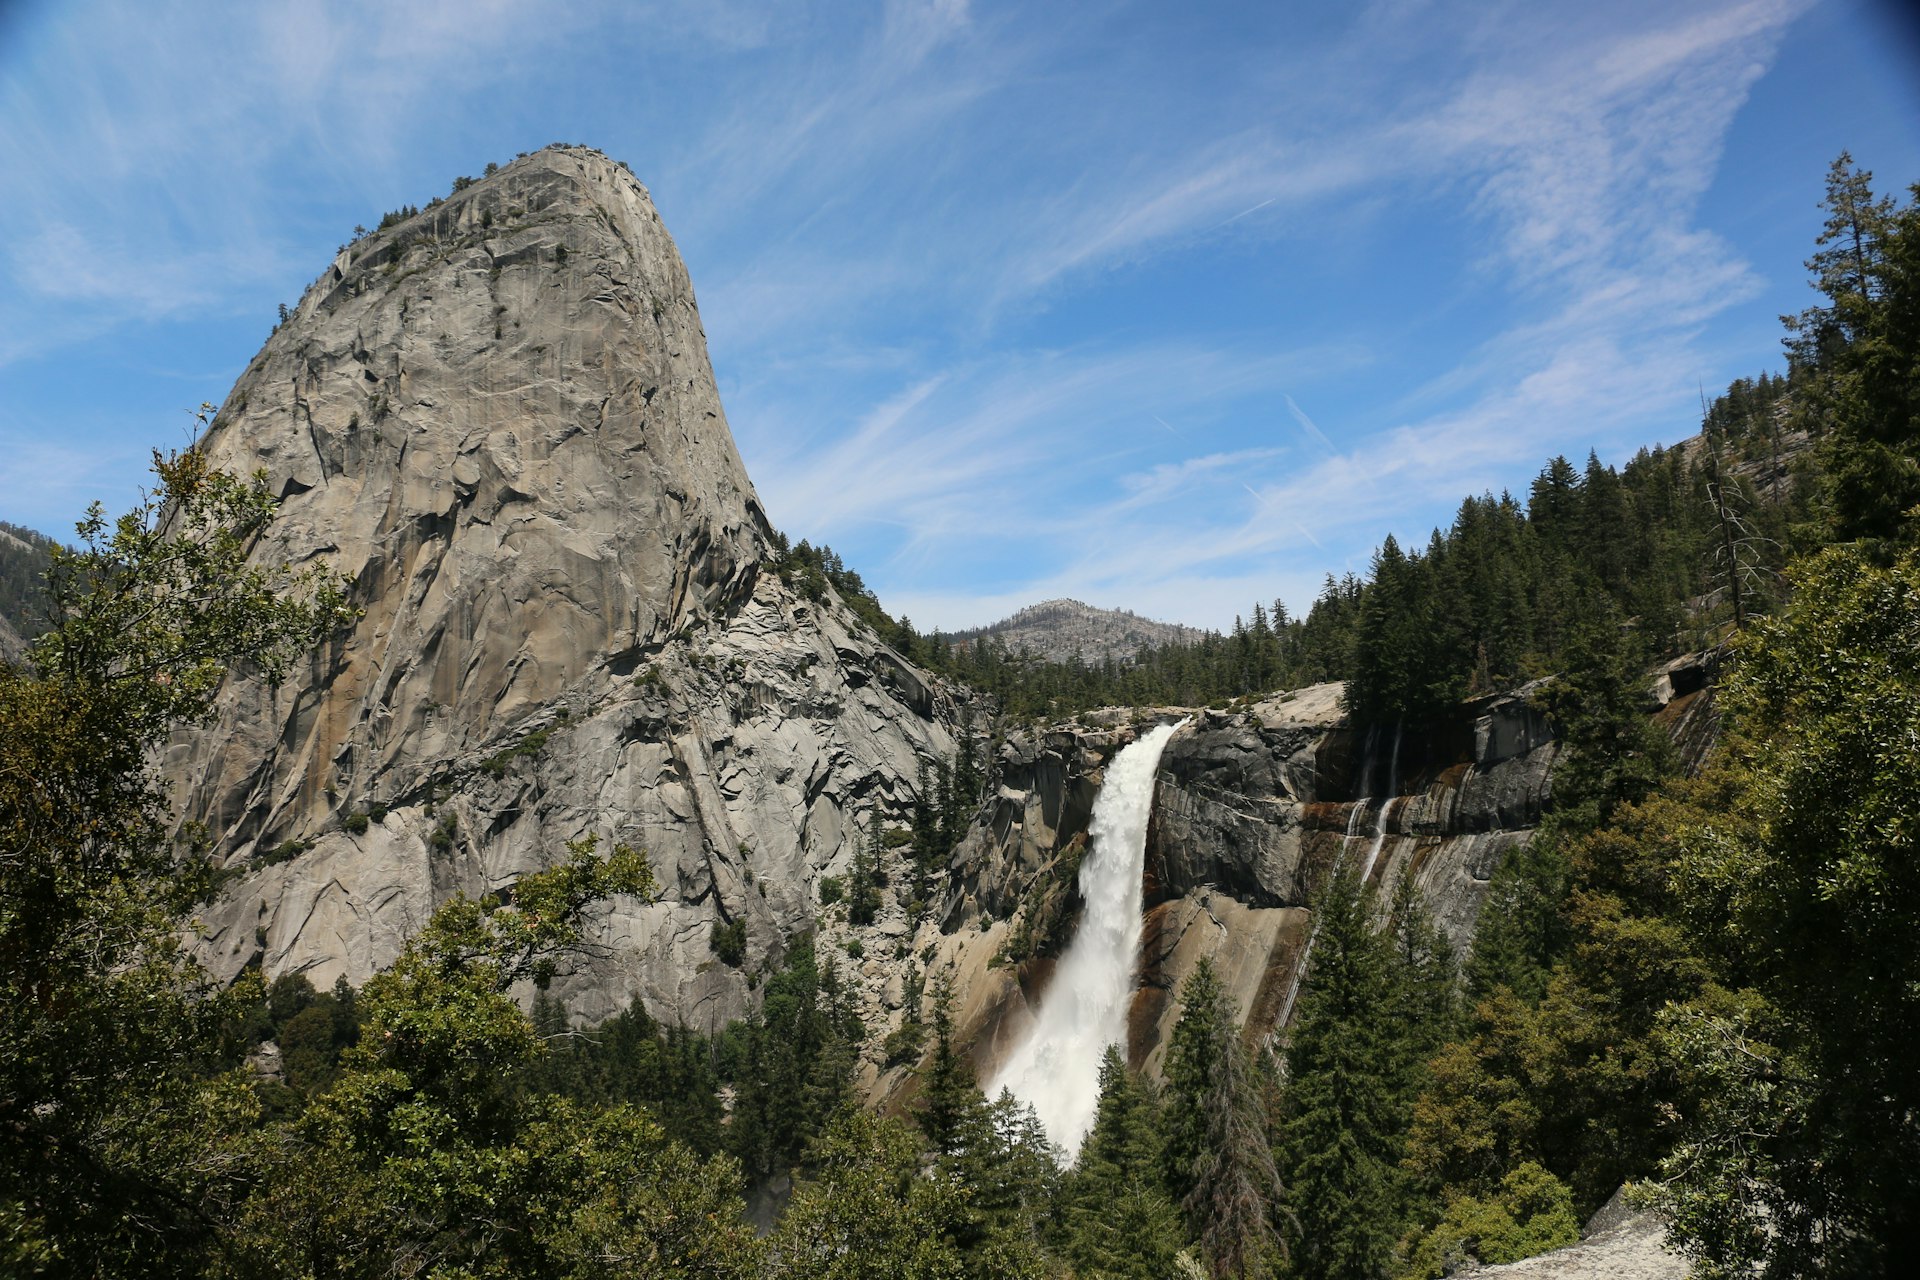 Nevada Fall and Liberty Cap in Yosemite National Park, California